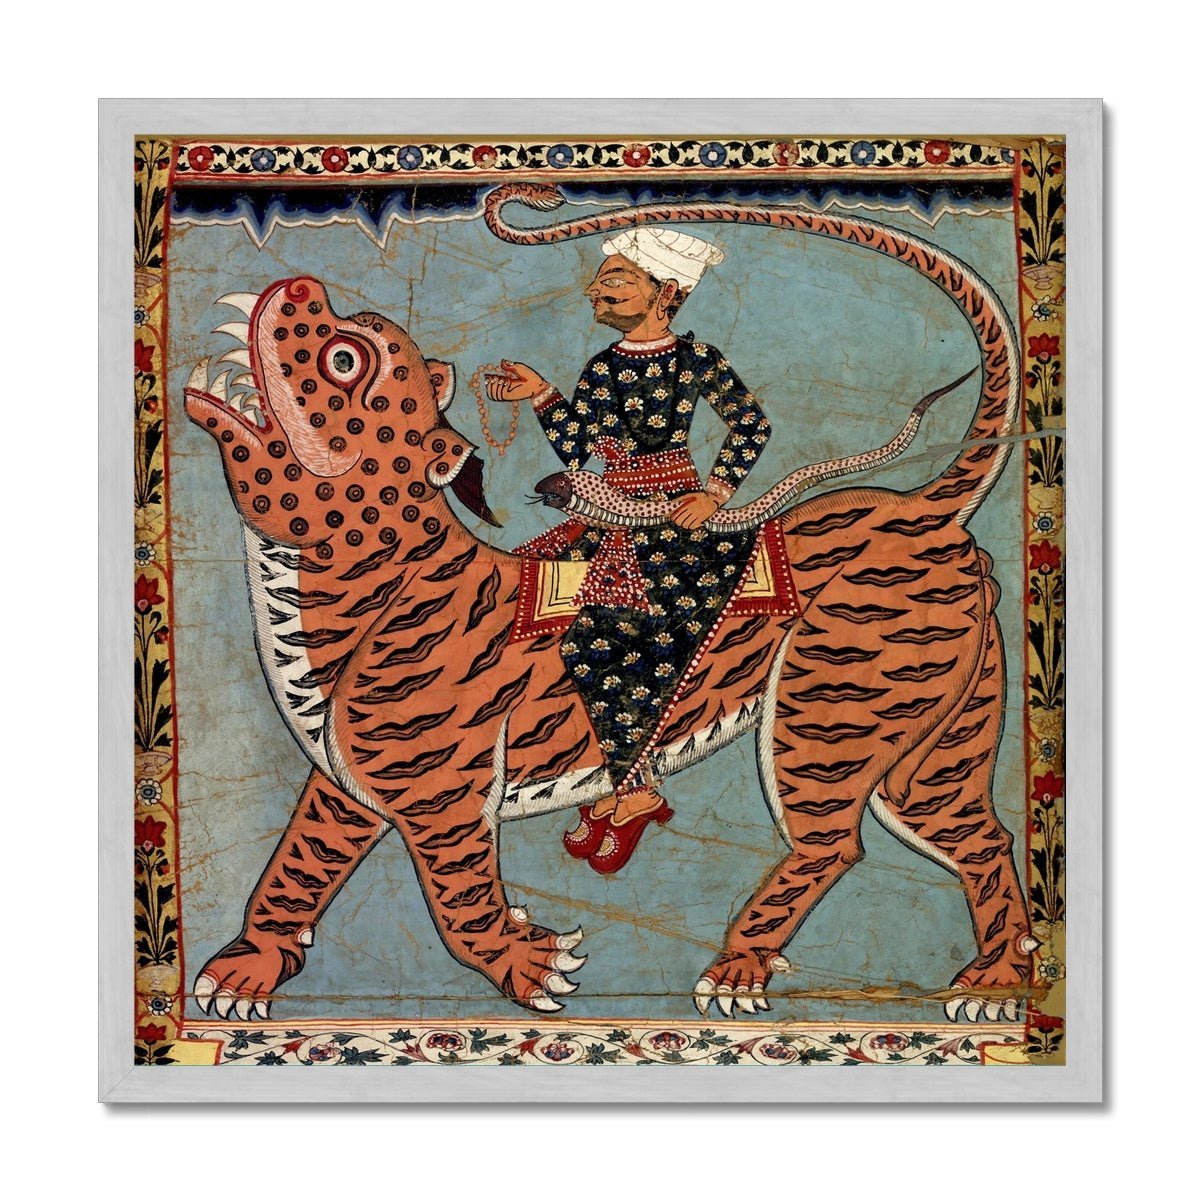 Fine art 12"x12" / Gold Frame Pir Gazi and His Tiger Antique Gold and Silver, Indian Art, Islamic Art, Muslim Art, Sufi Rumi Mystic Cat, Antique Gold and Silver Framed Print